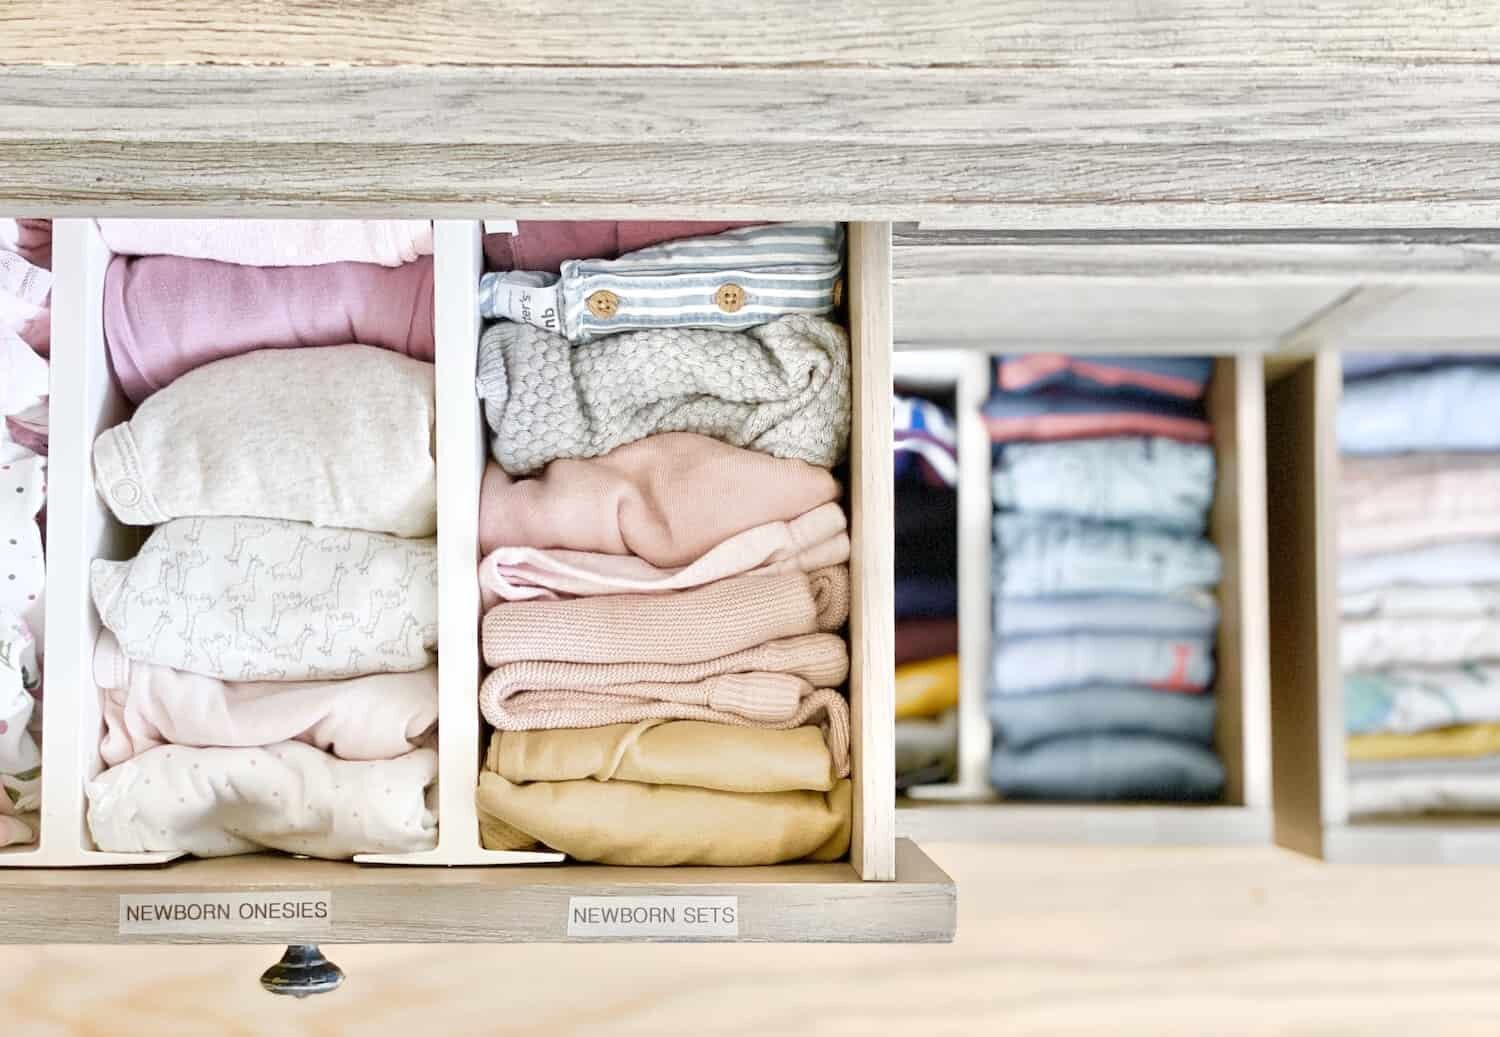 Organized-drawer-newborn-sets-clothes.JPG